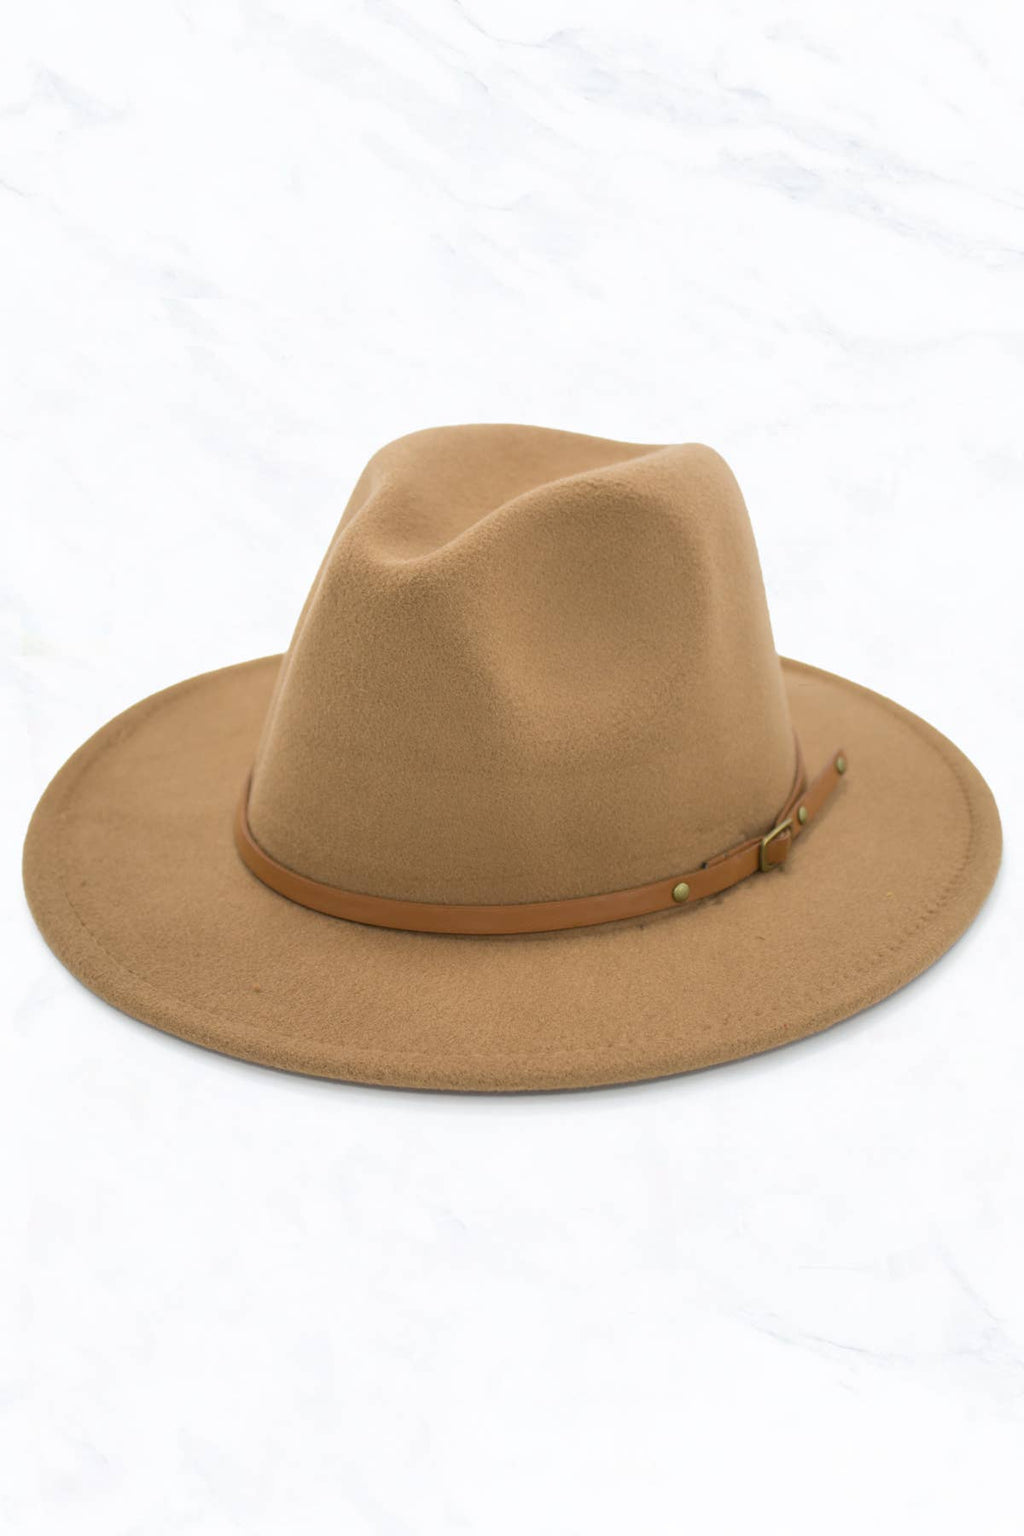 Retro Flat Brim Hat: Camel